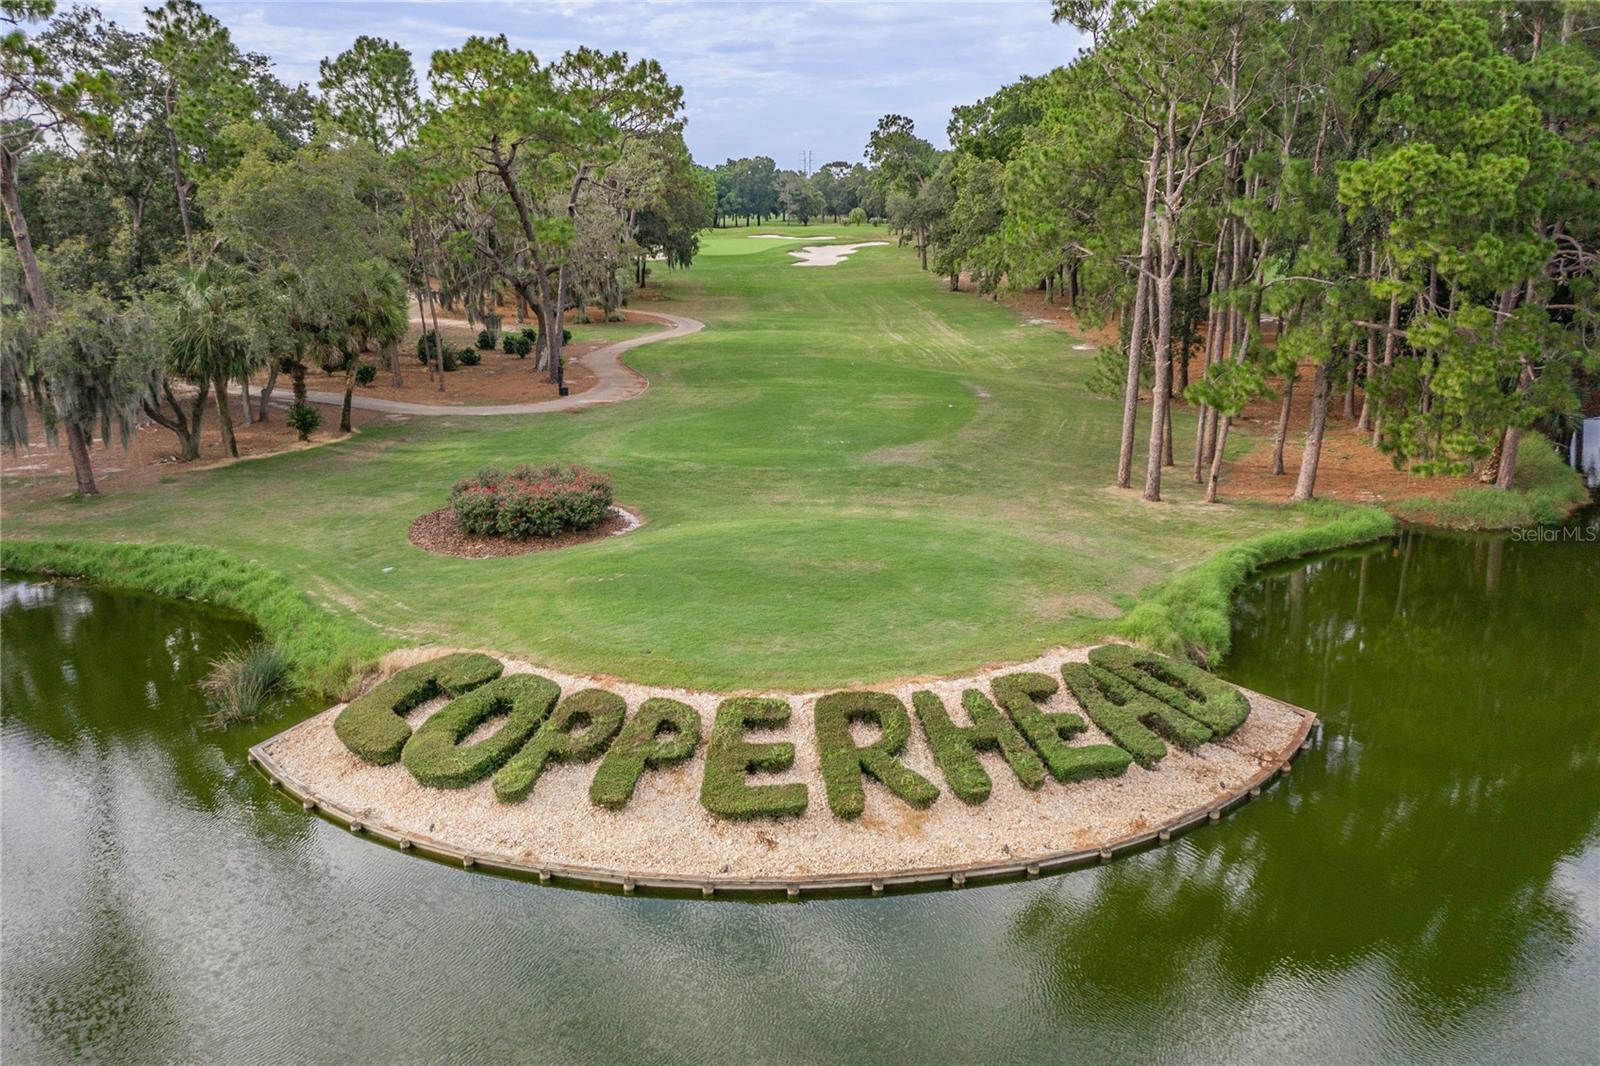 Copperhead golf course